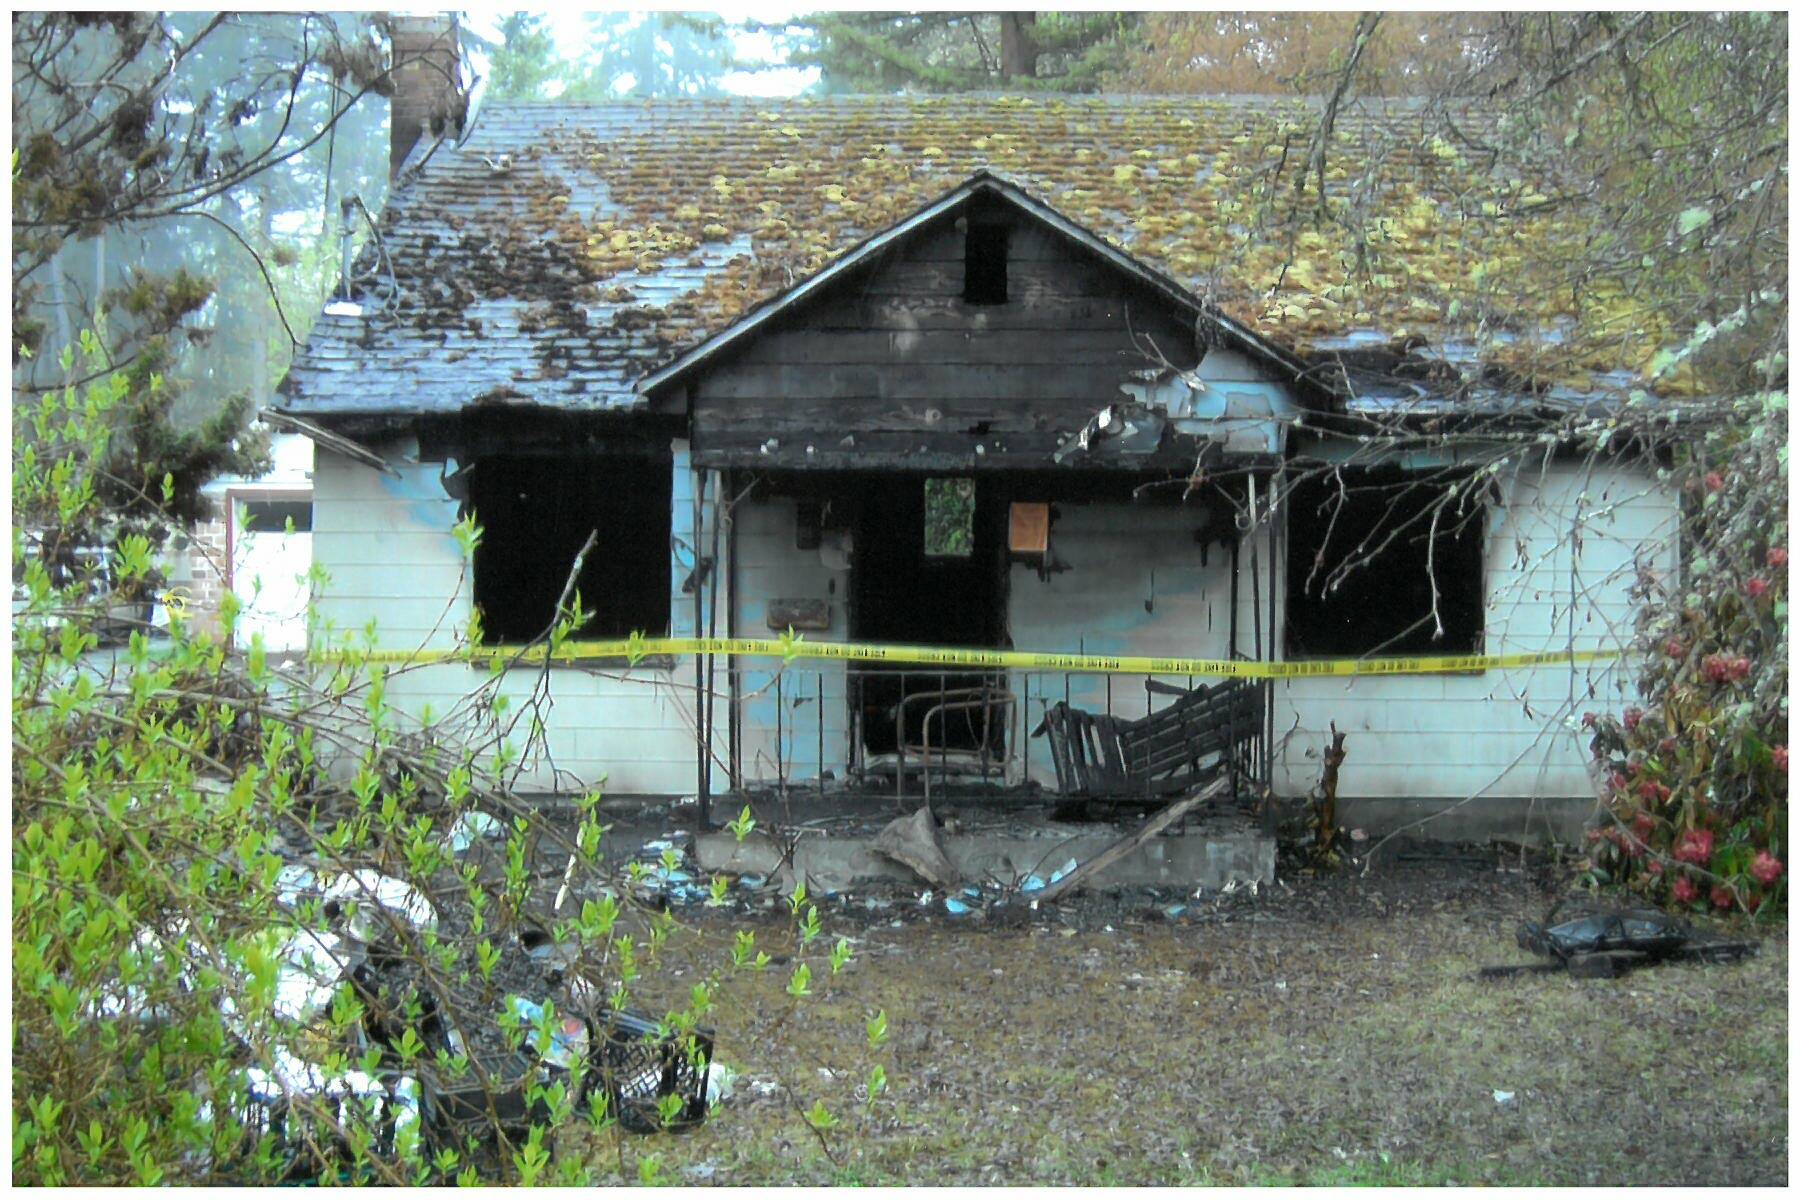 Linda Malcom family courtesy photo
The burned house where Linda Malcom was found murdered.